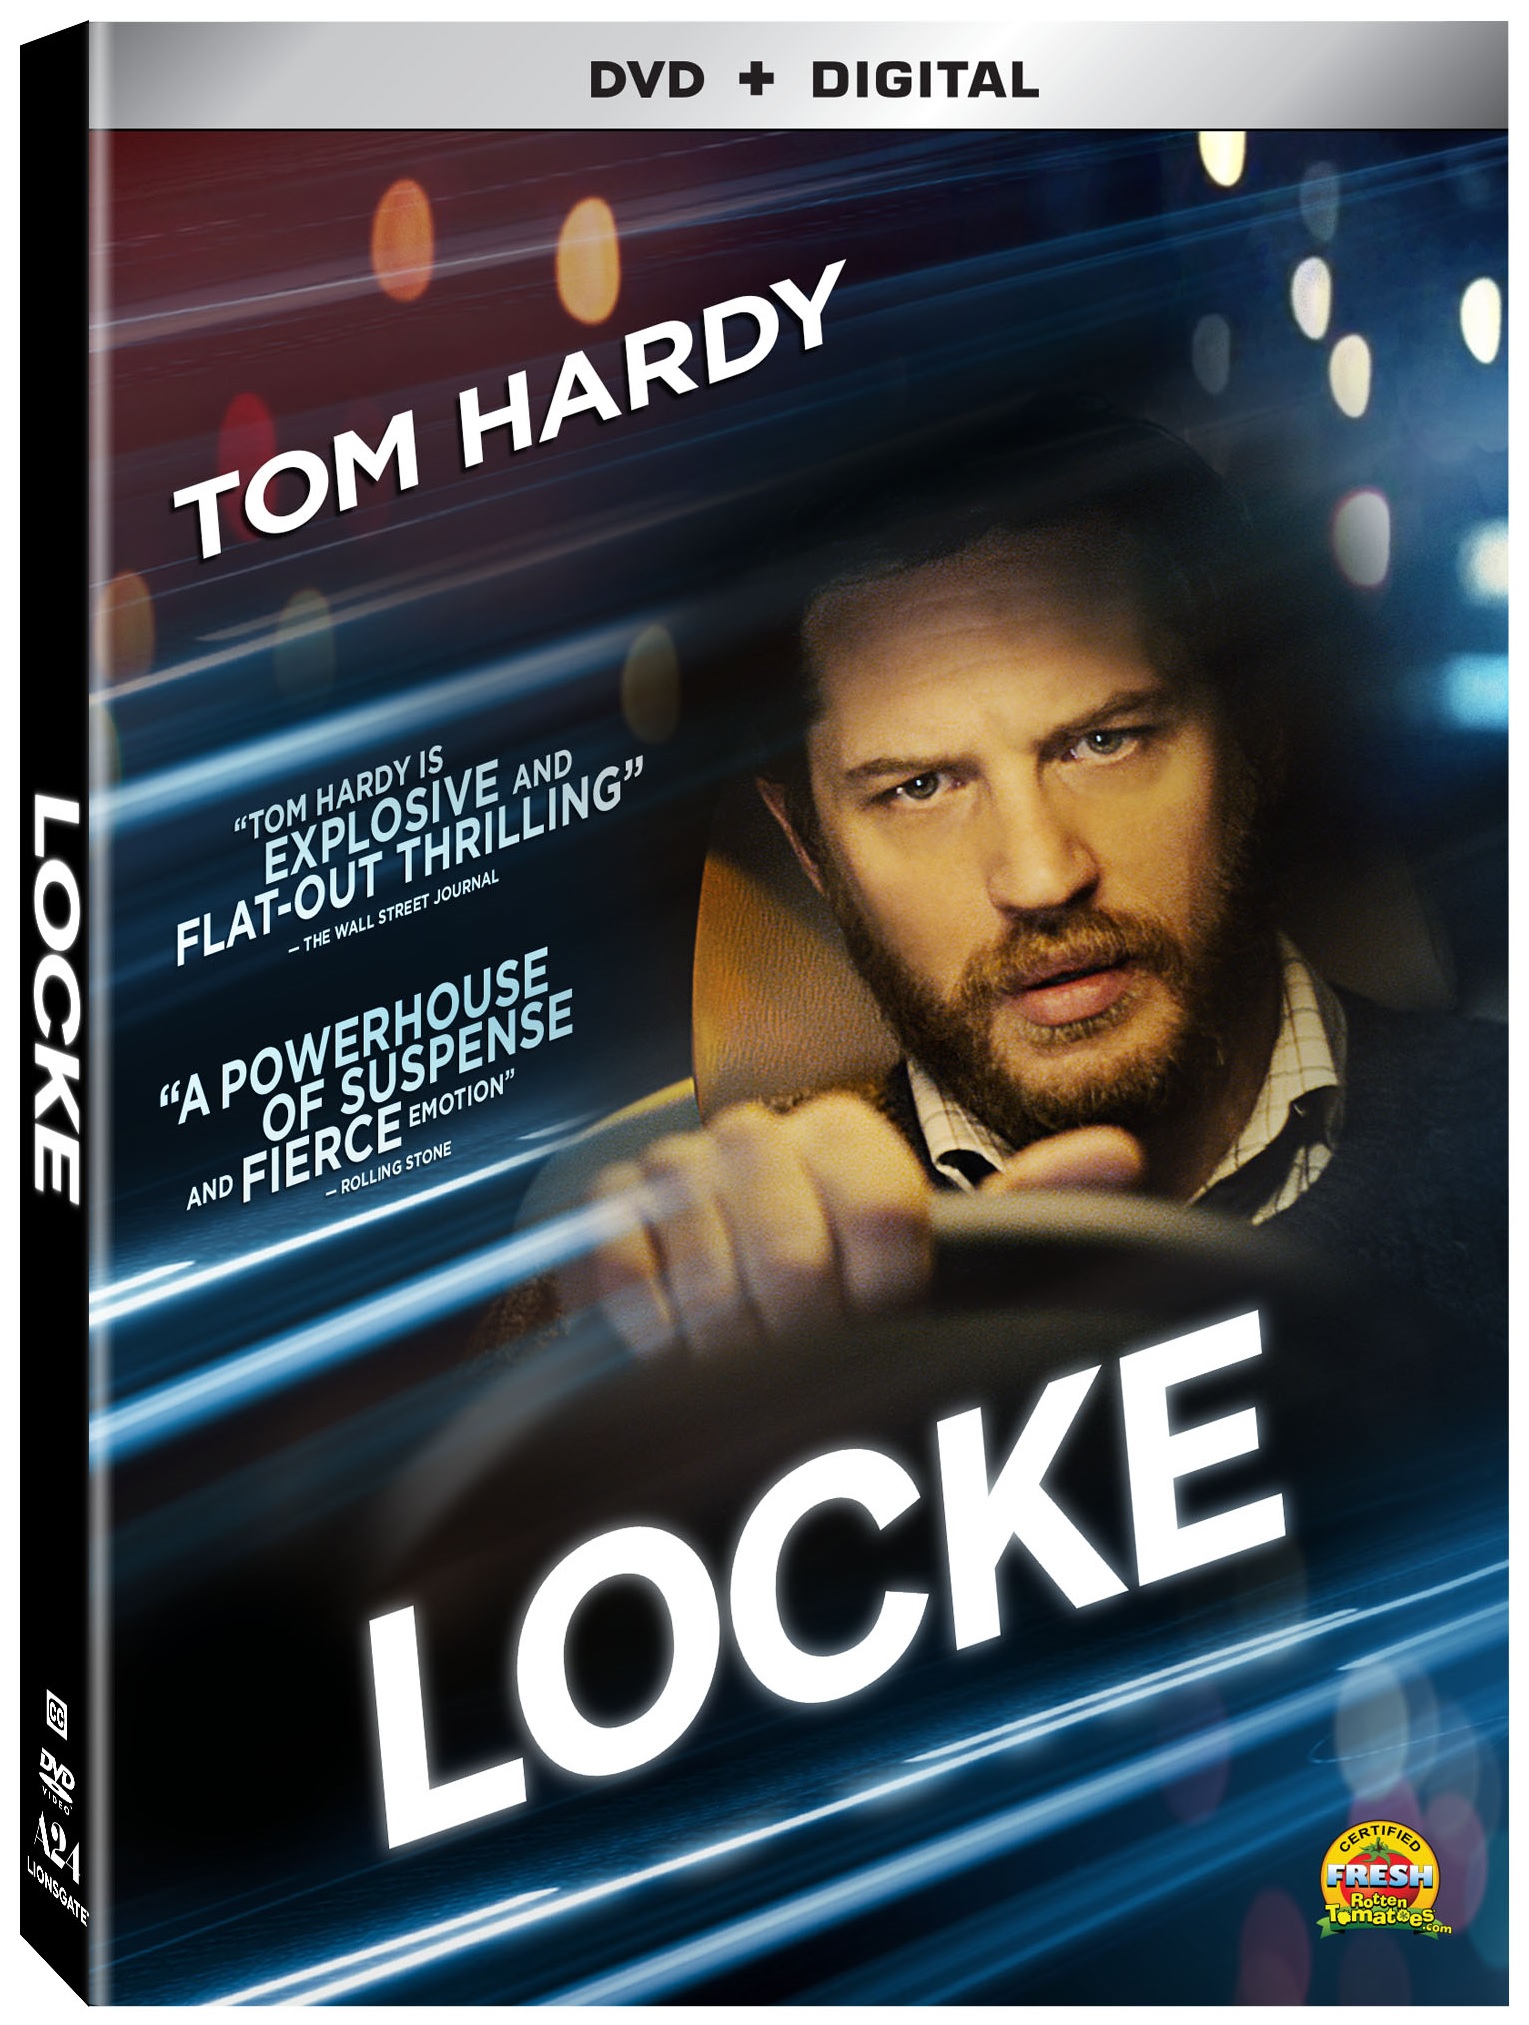 Locke DVD Review